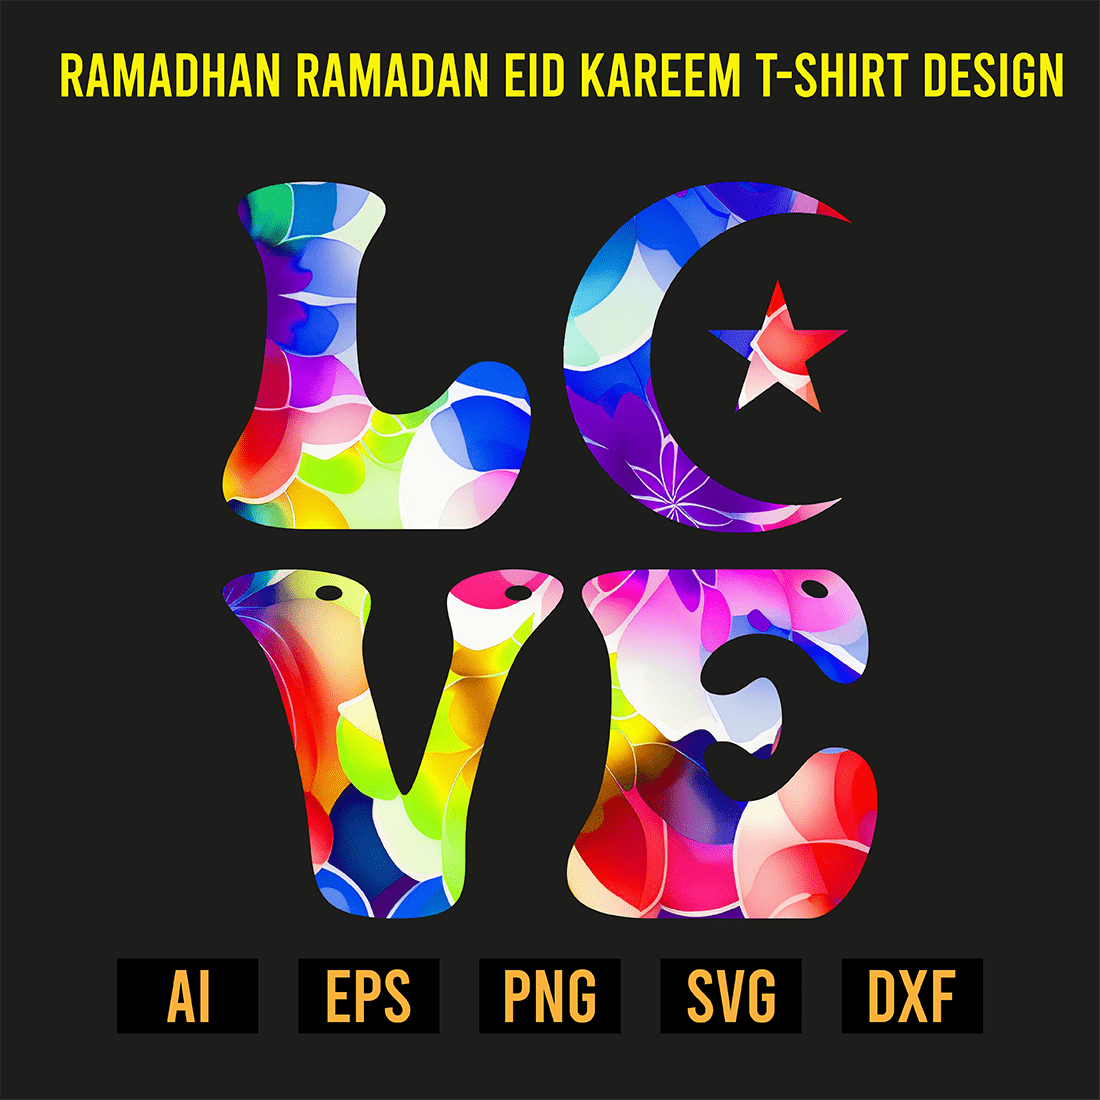 Ramadhan Ramadan Eid Kareem T-Shirt Design preview image.